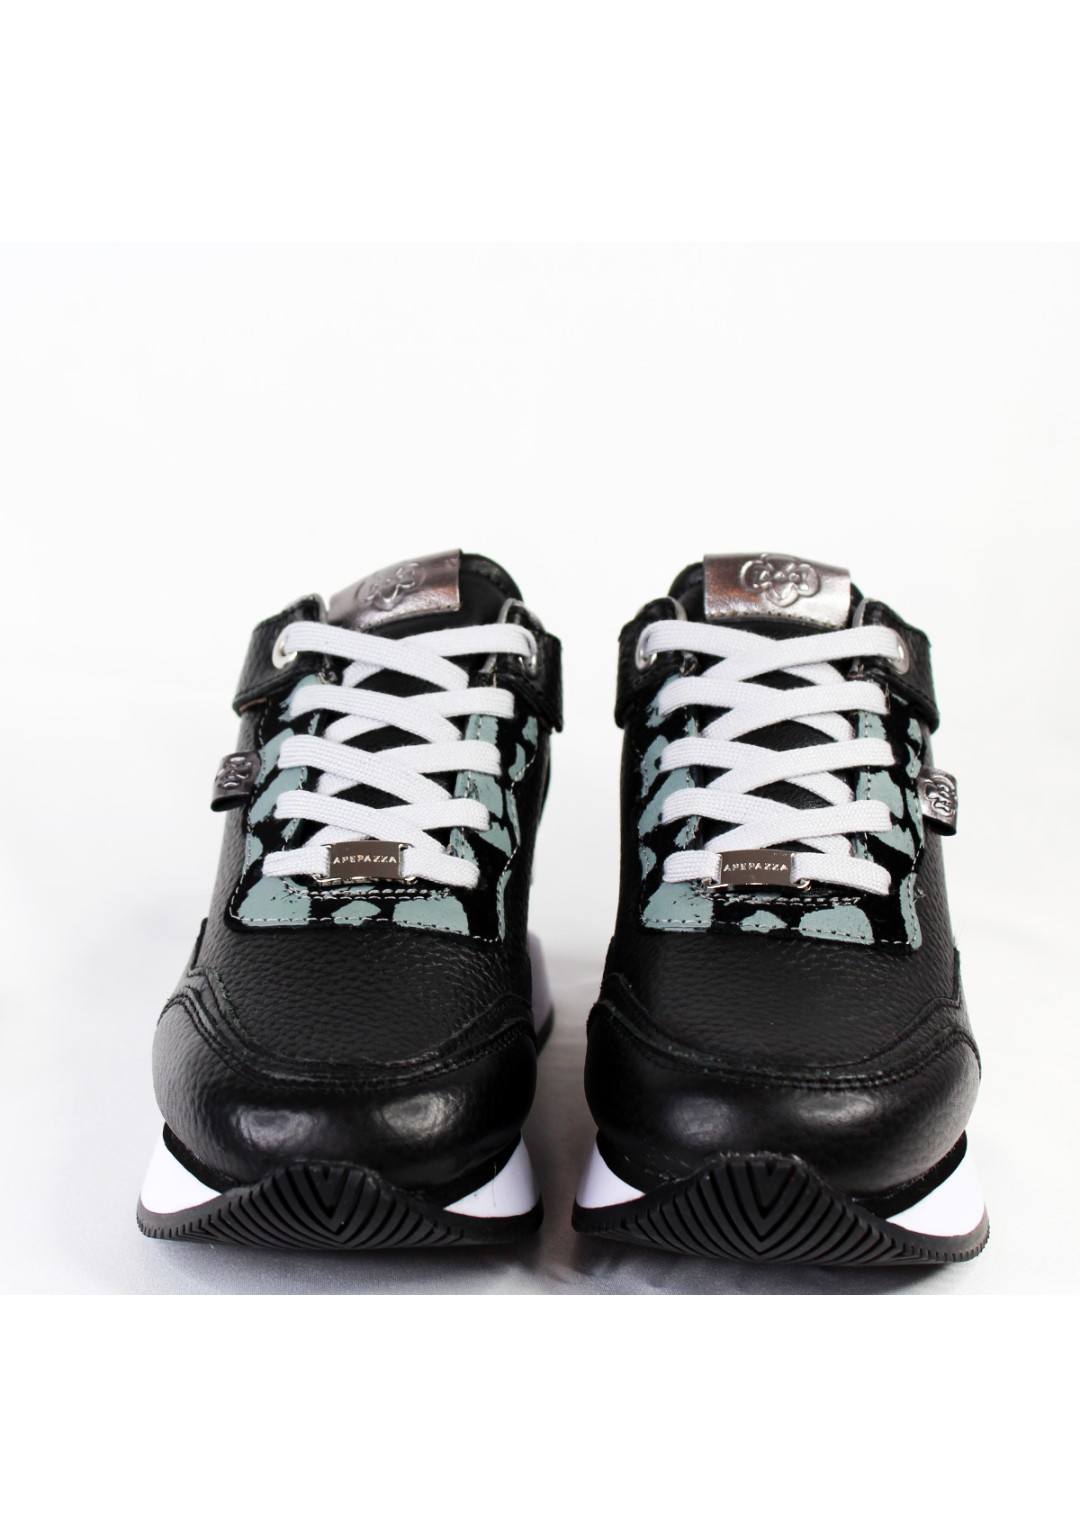 Apepazza - Sneaker platform - Donna - F2MIDHIGH13N